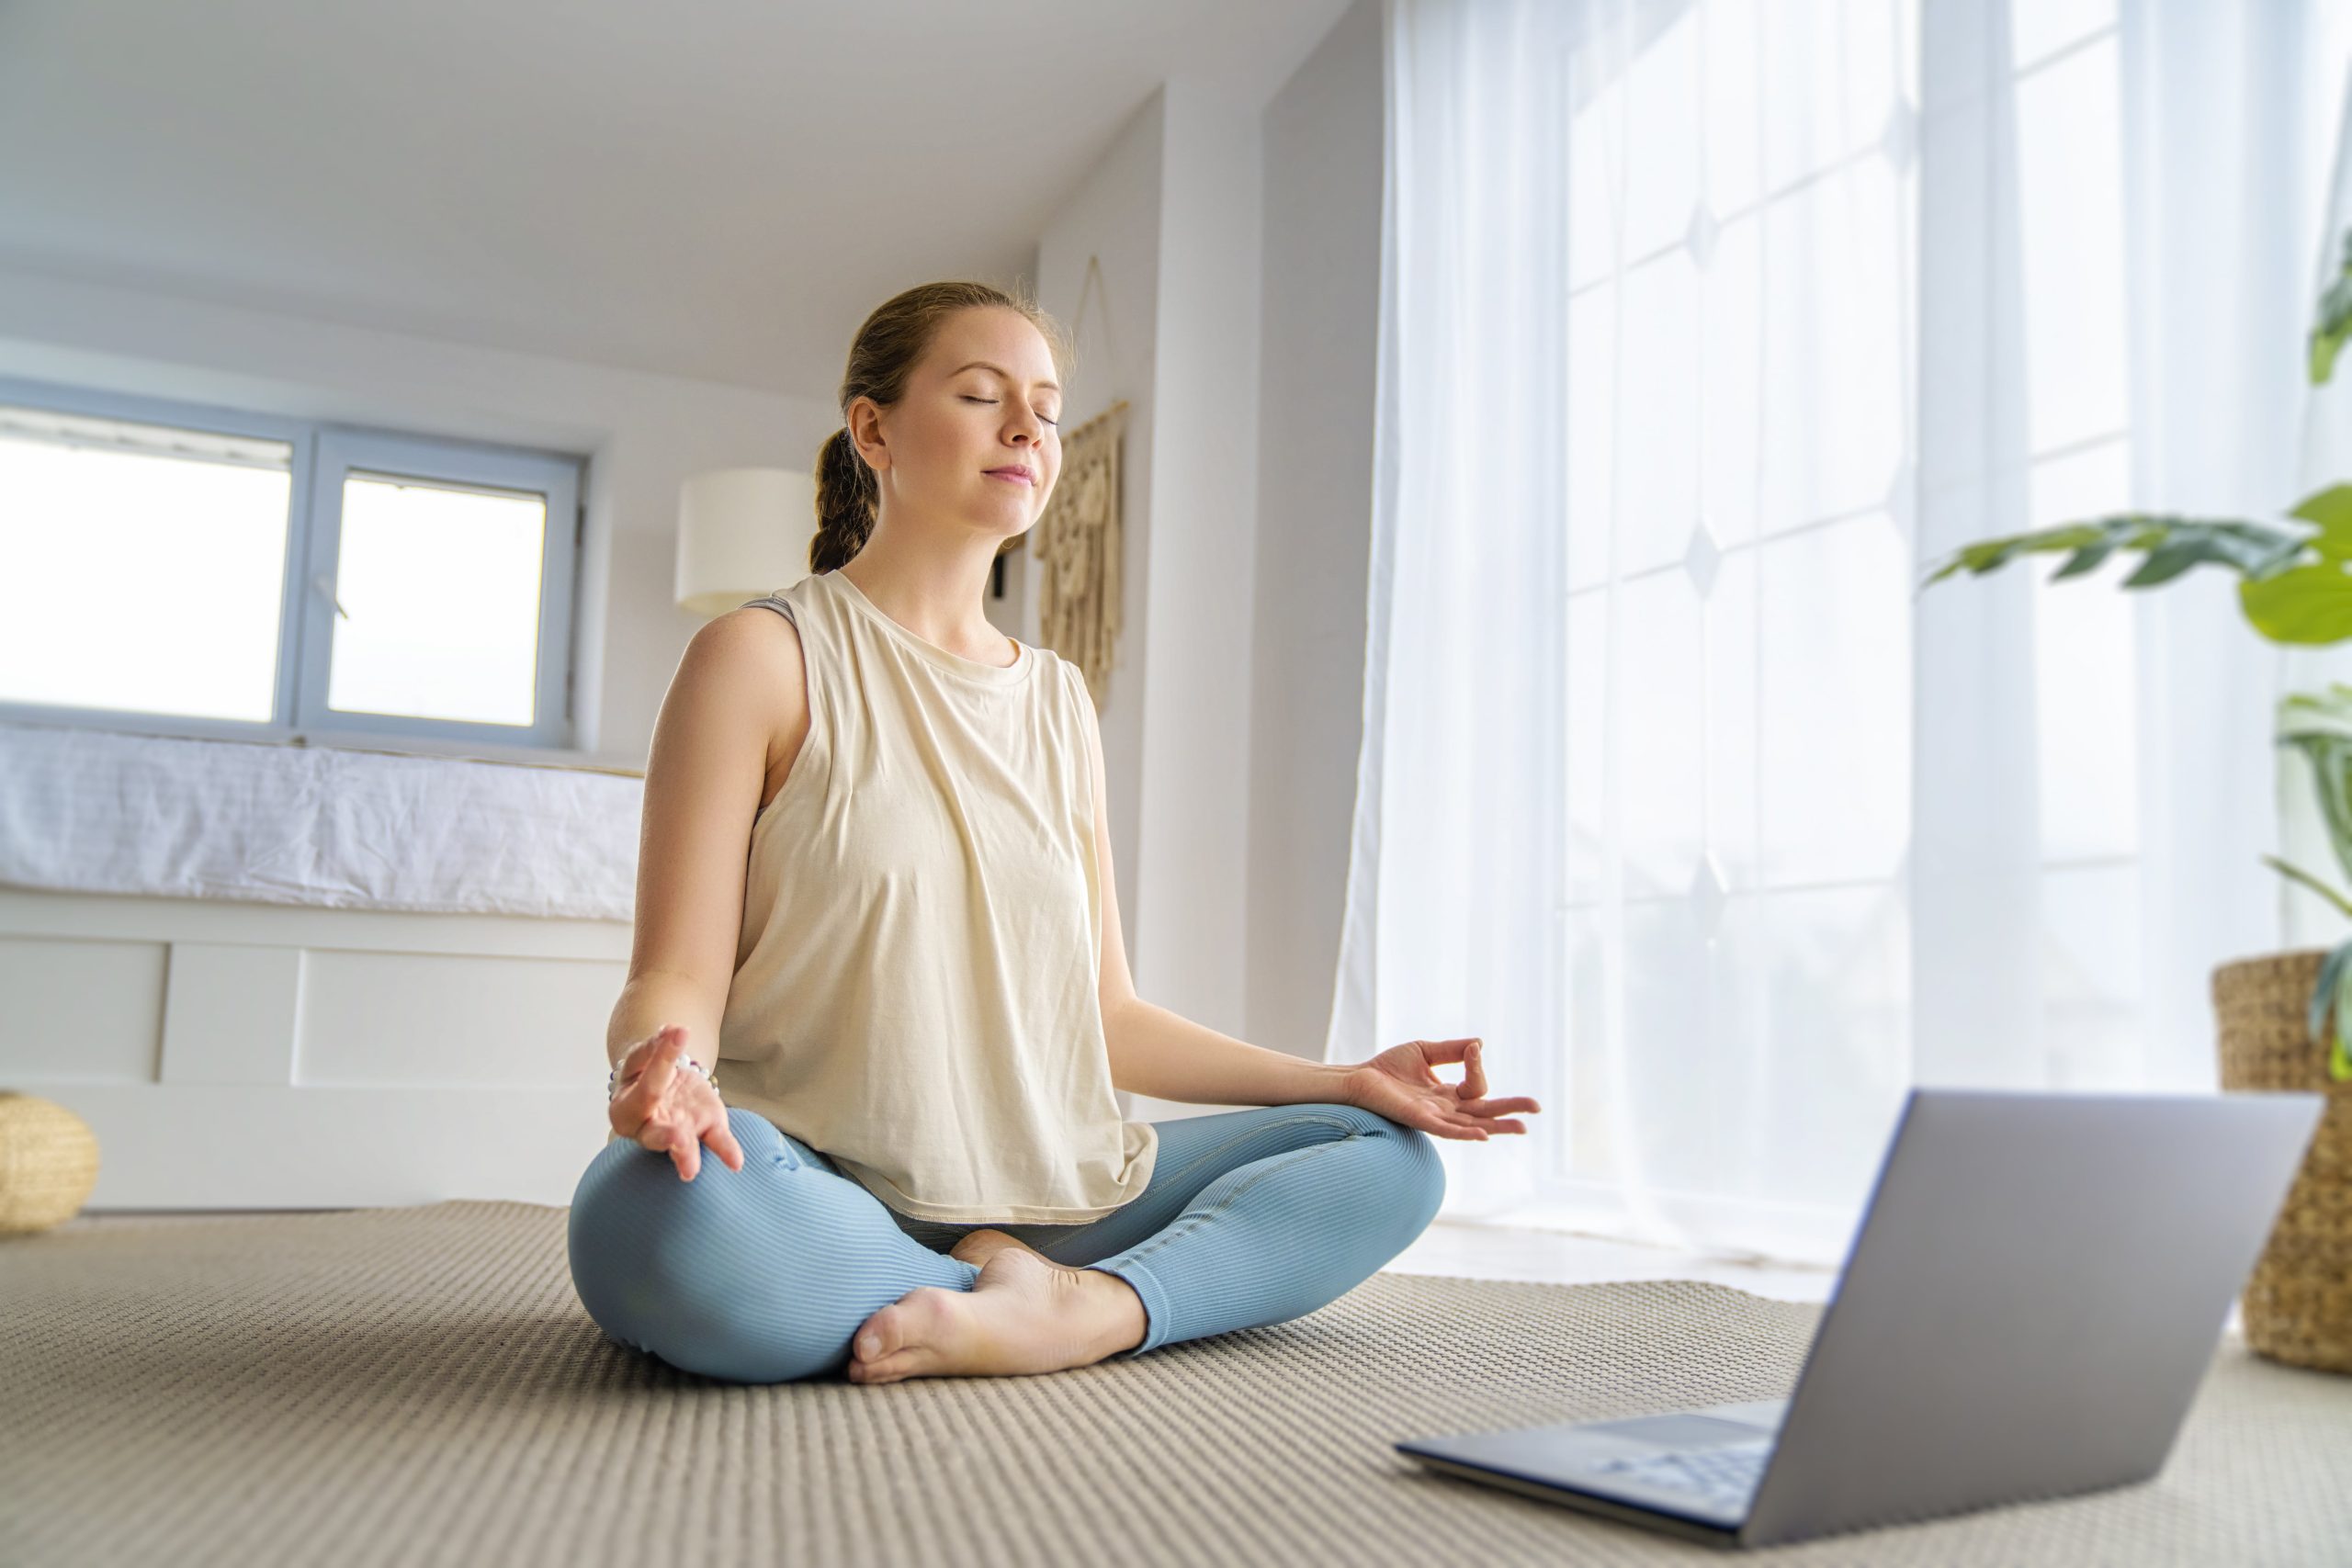 Woman Is Doing Meditation 2022 11 16 18 03 25 Utc Min Scaled